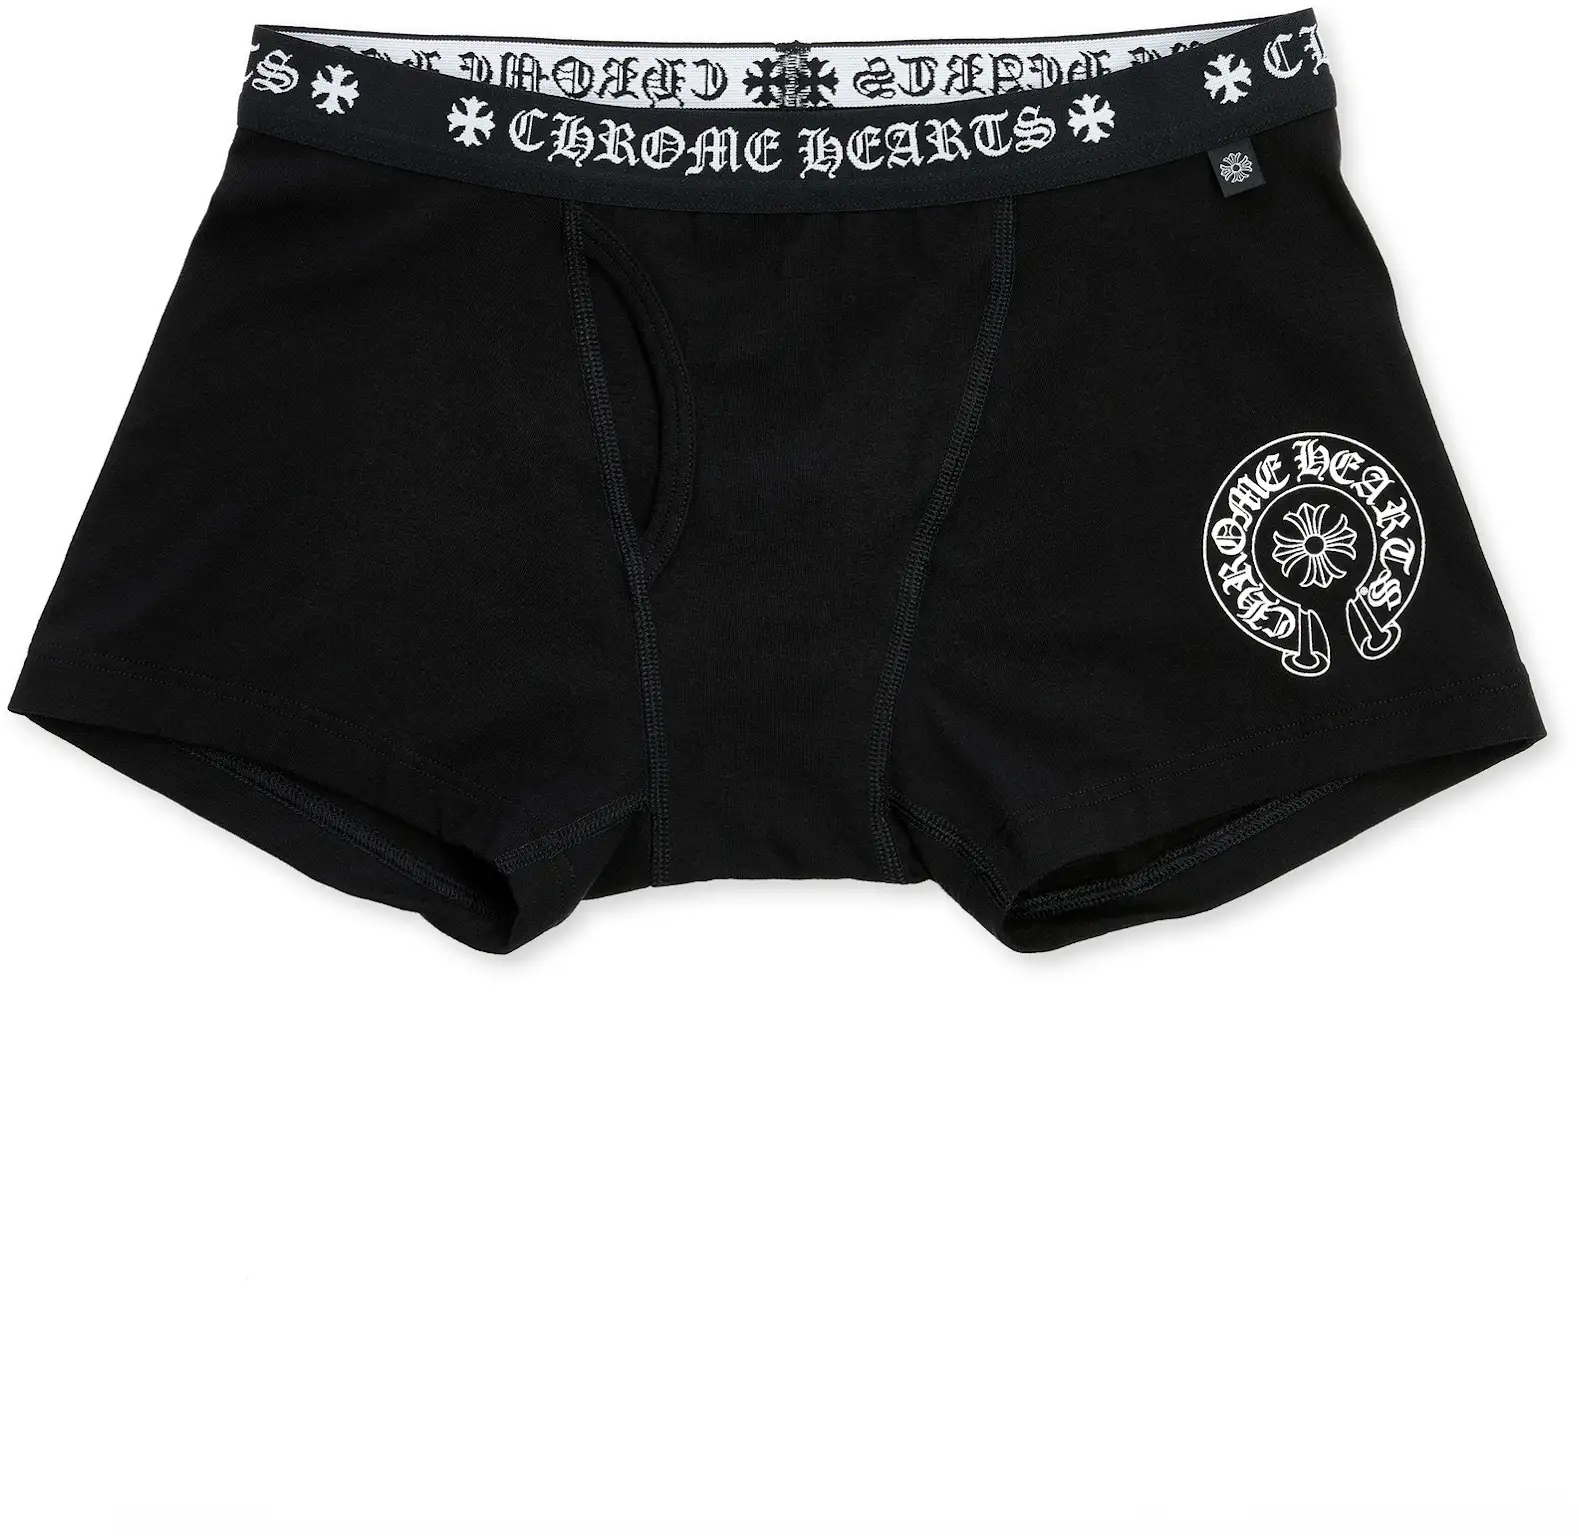 Chrome Hearts Boxer Brief Shorts Black/White - SS23 - IT